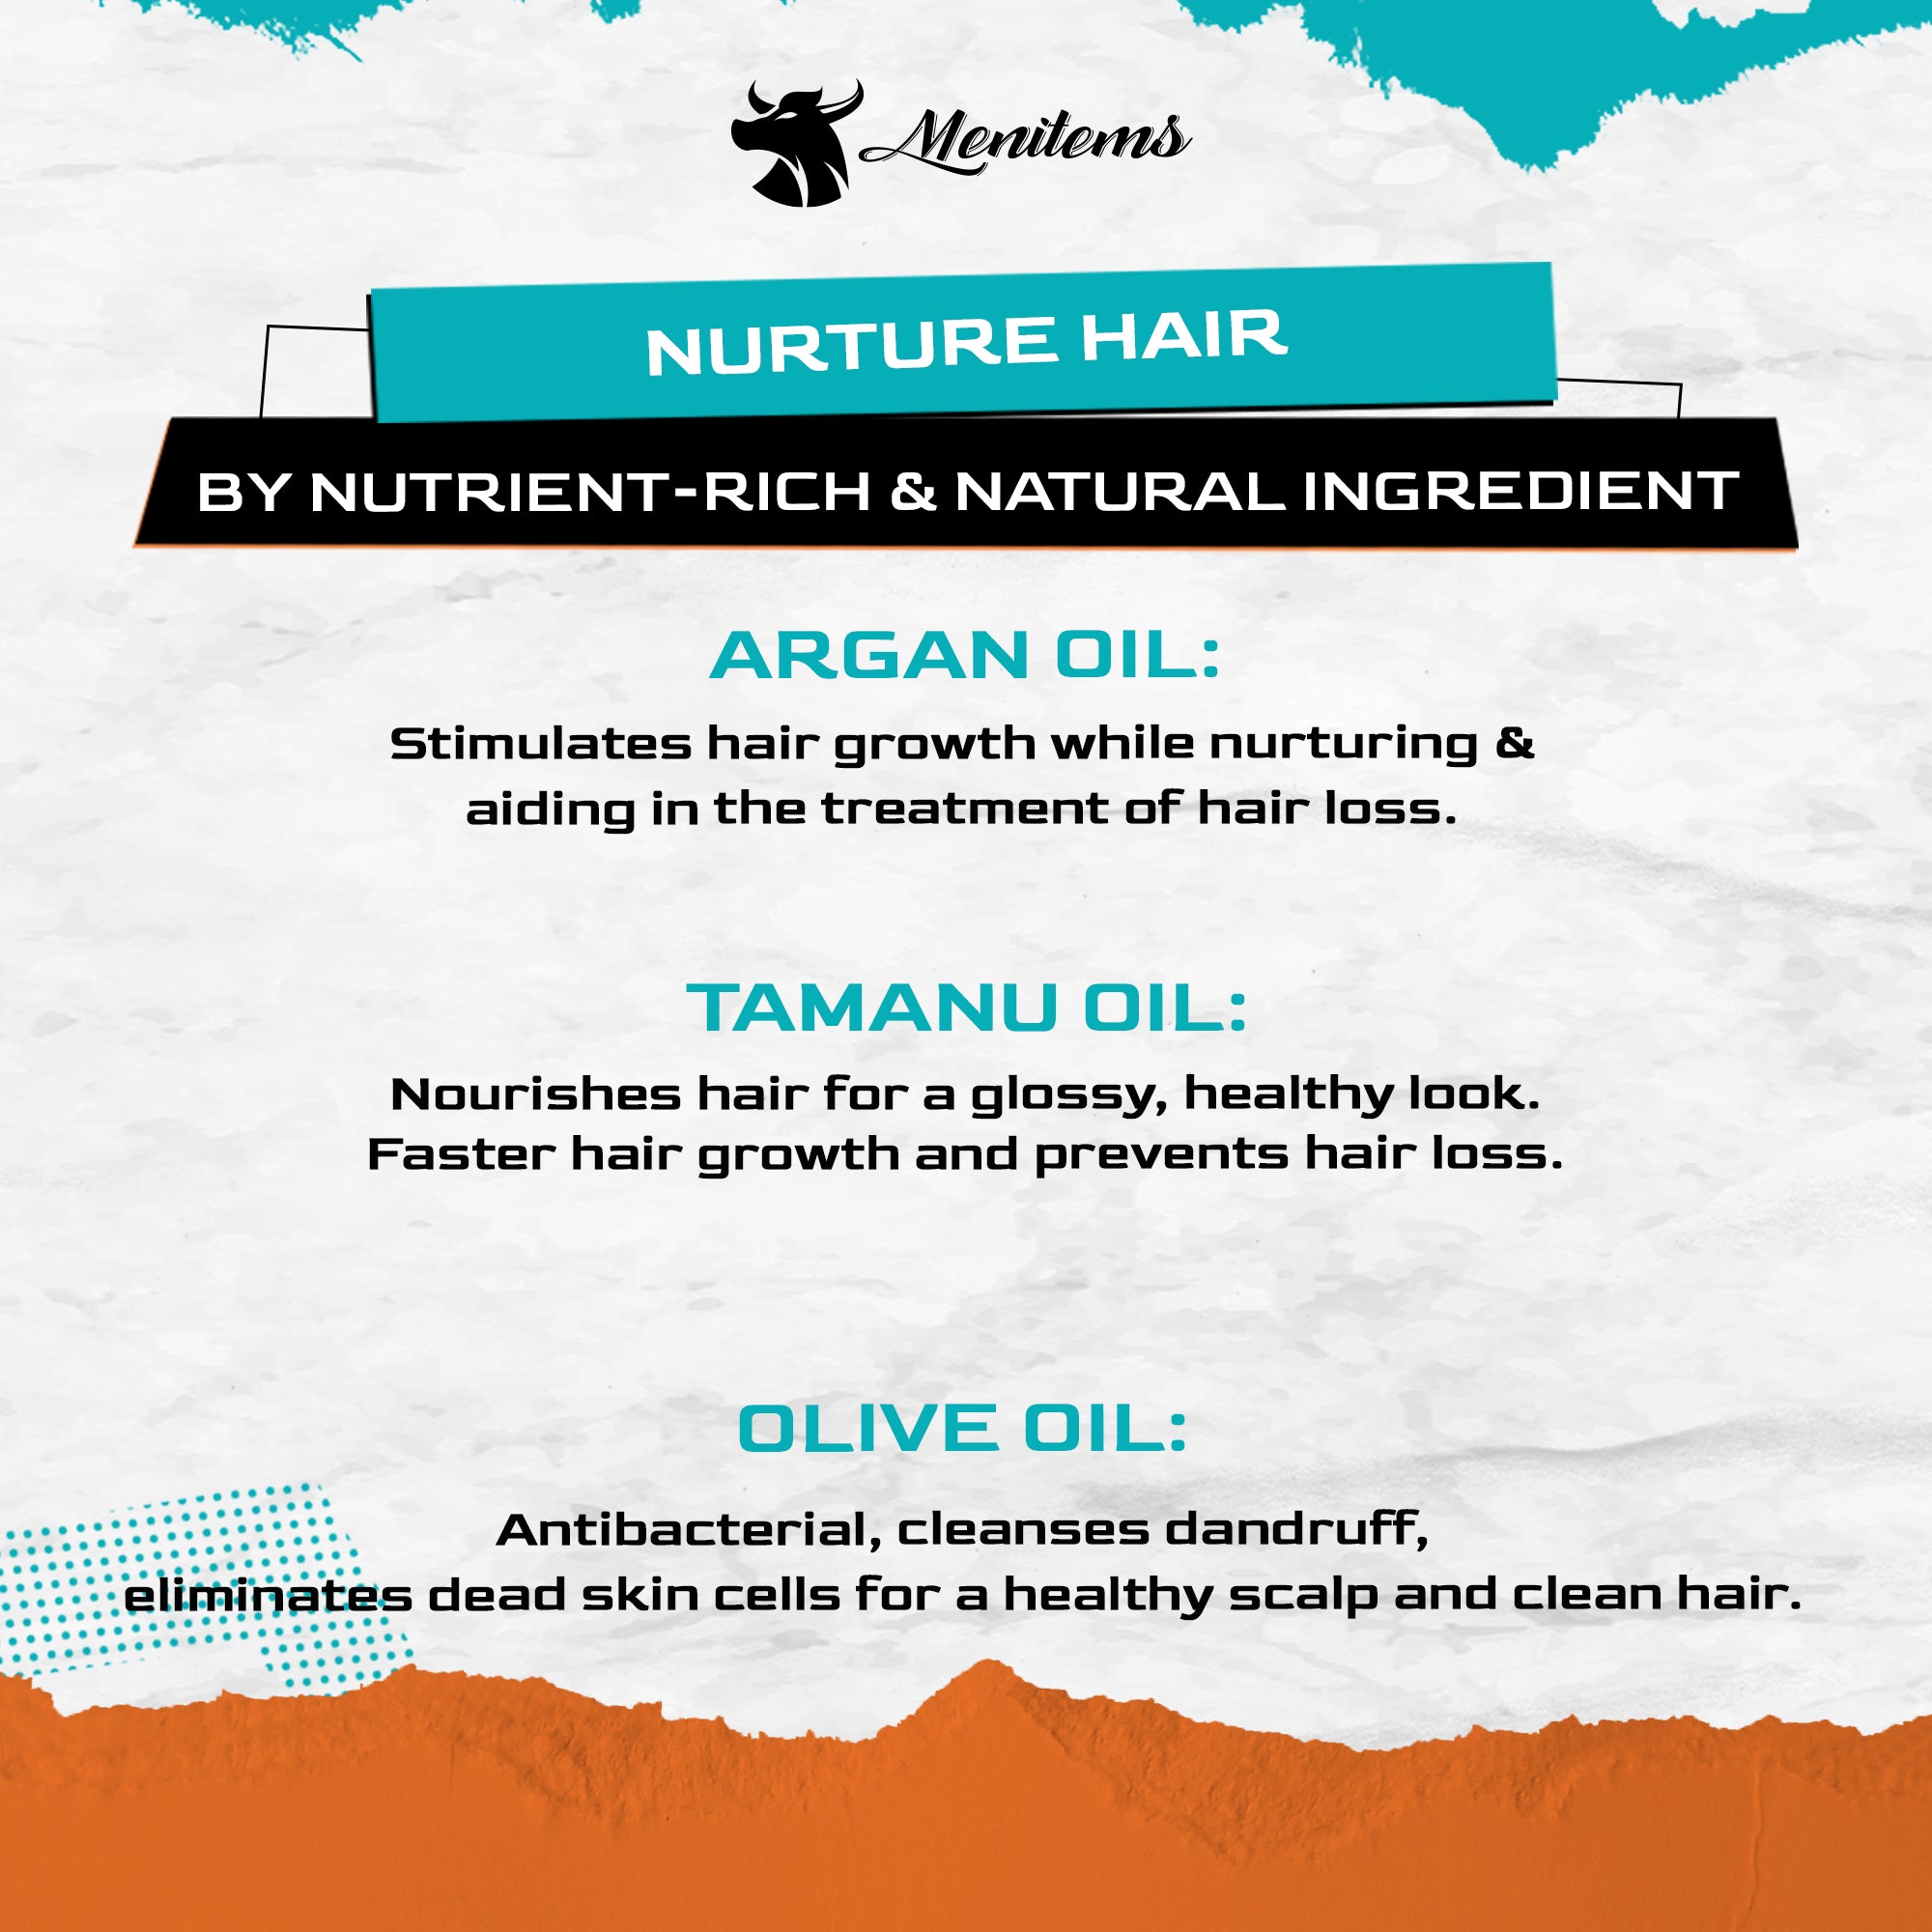 Perfumed Hair Care Essential Oil 30ml